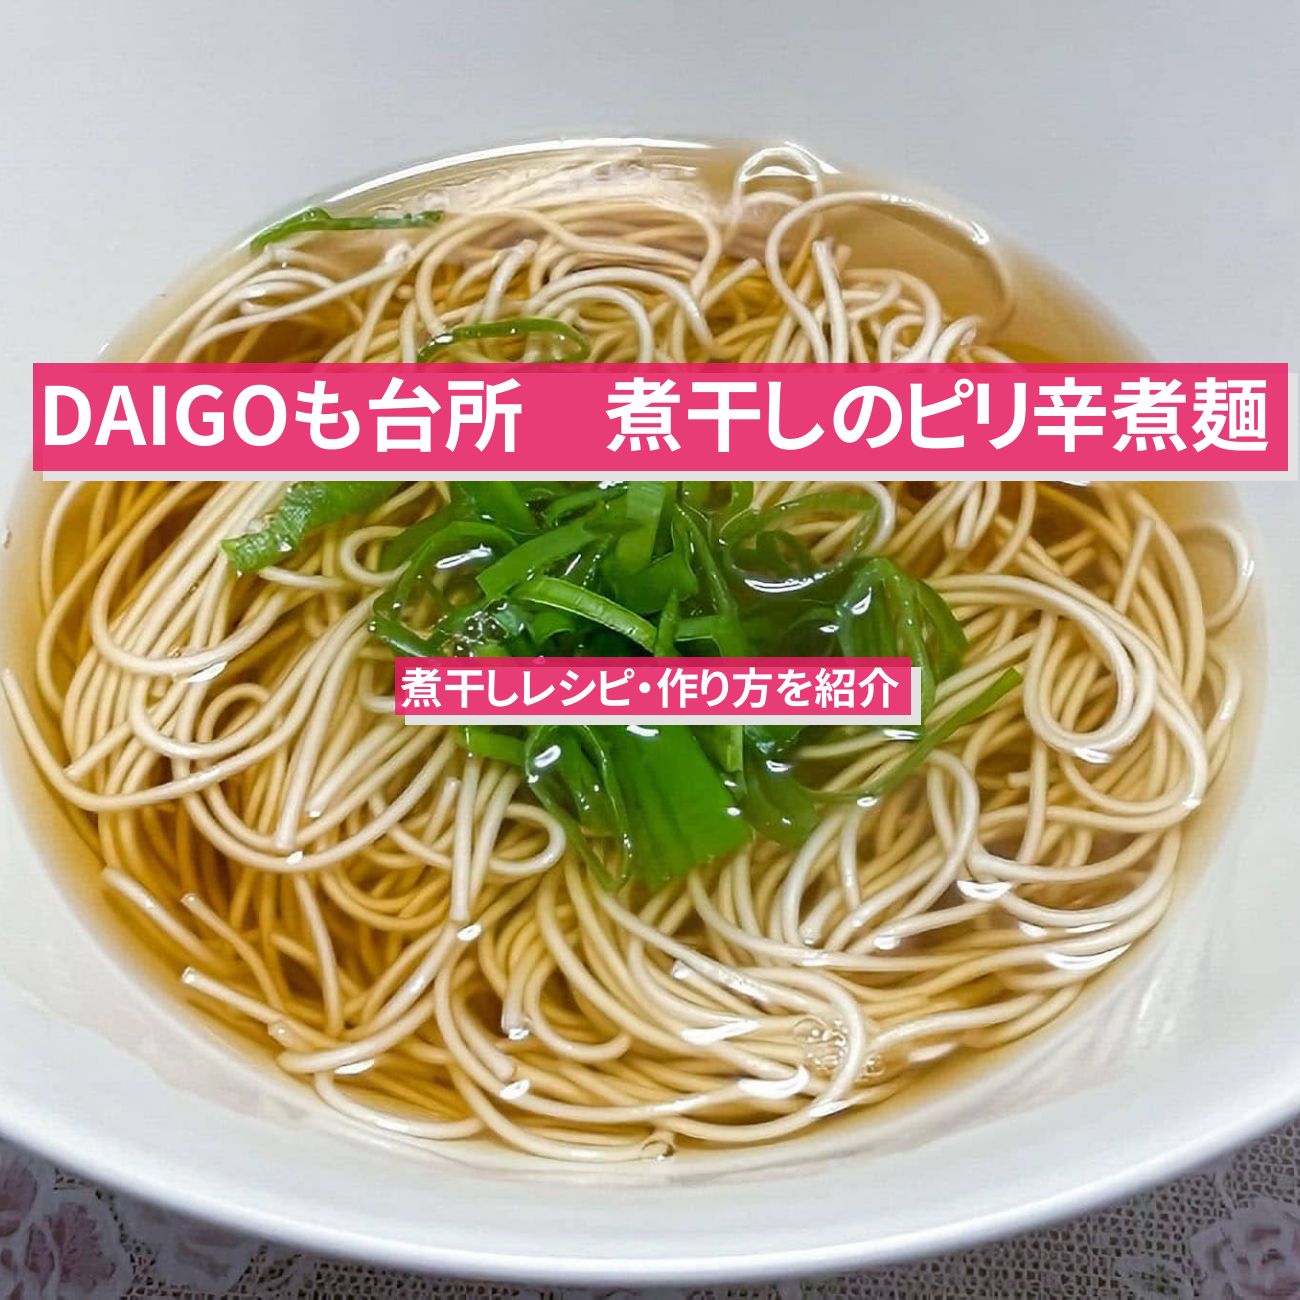 【DAIGOも台所】『煮干しのピリ辛煮麺(にゅうめん)』のレシピ・作り方を紹介